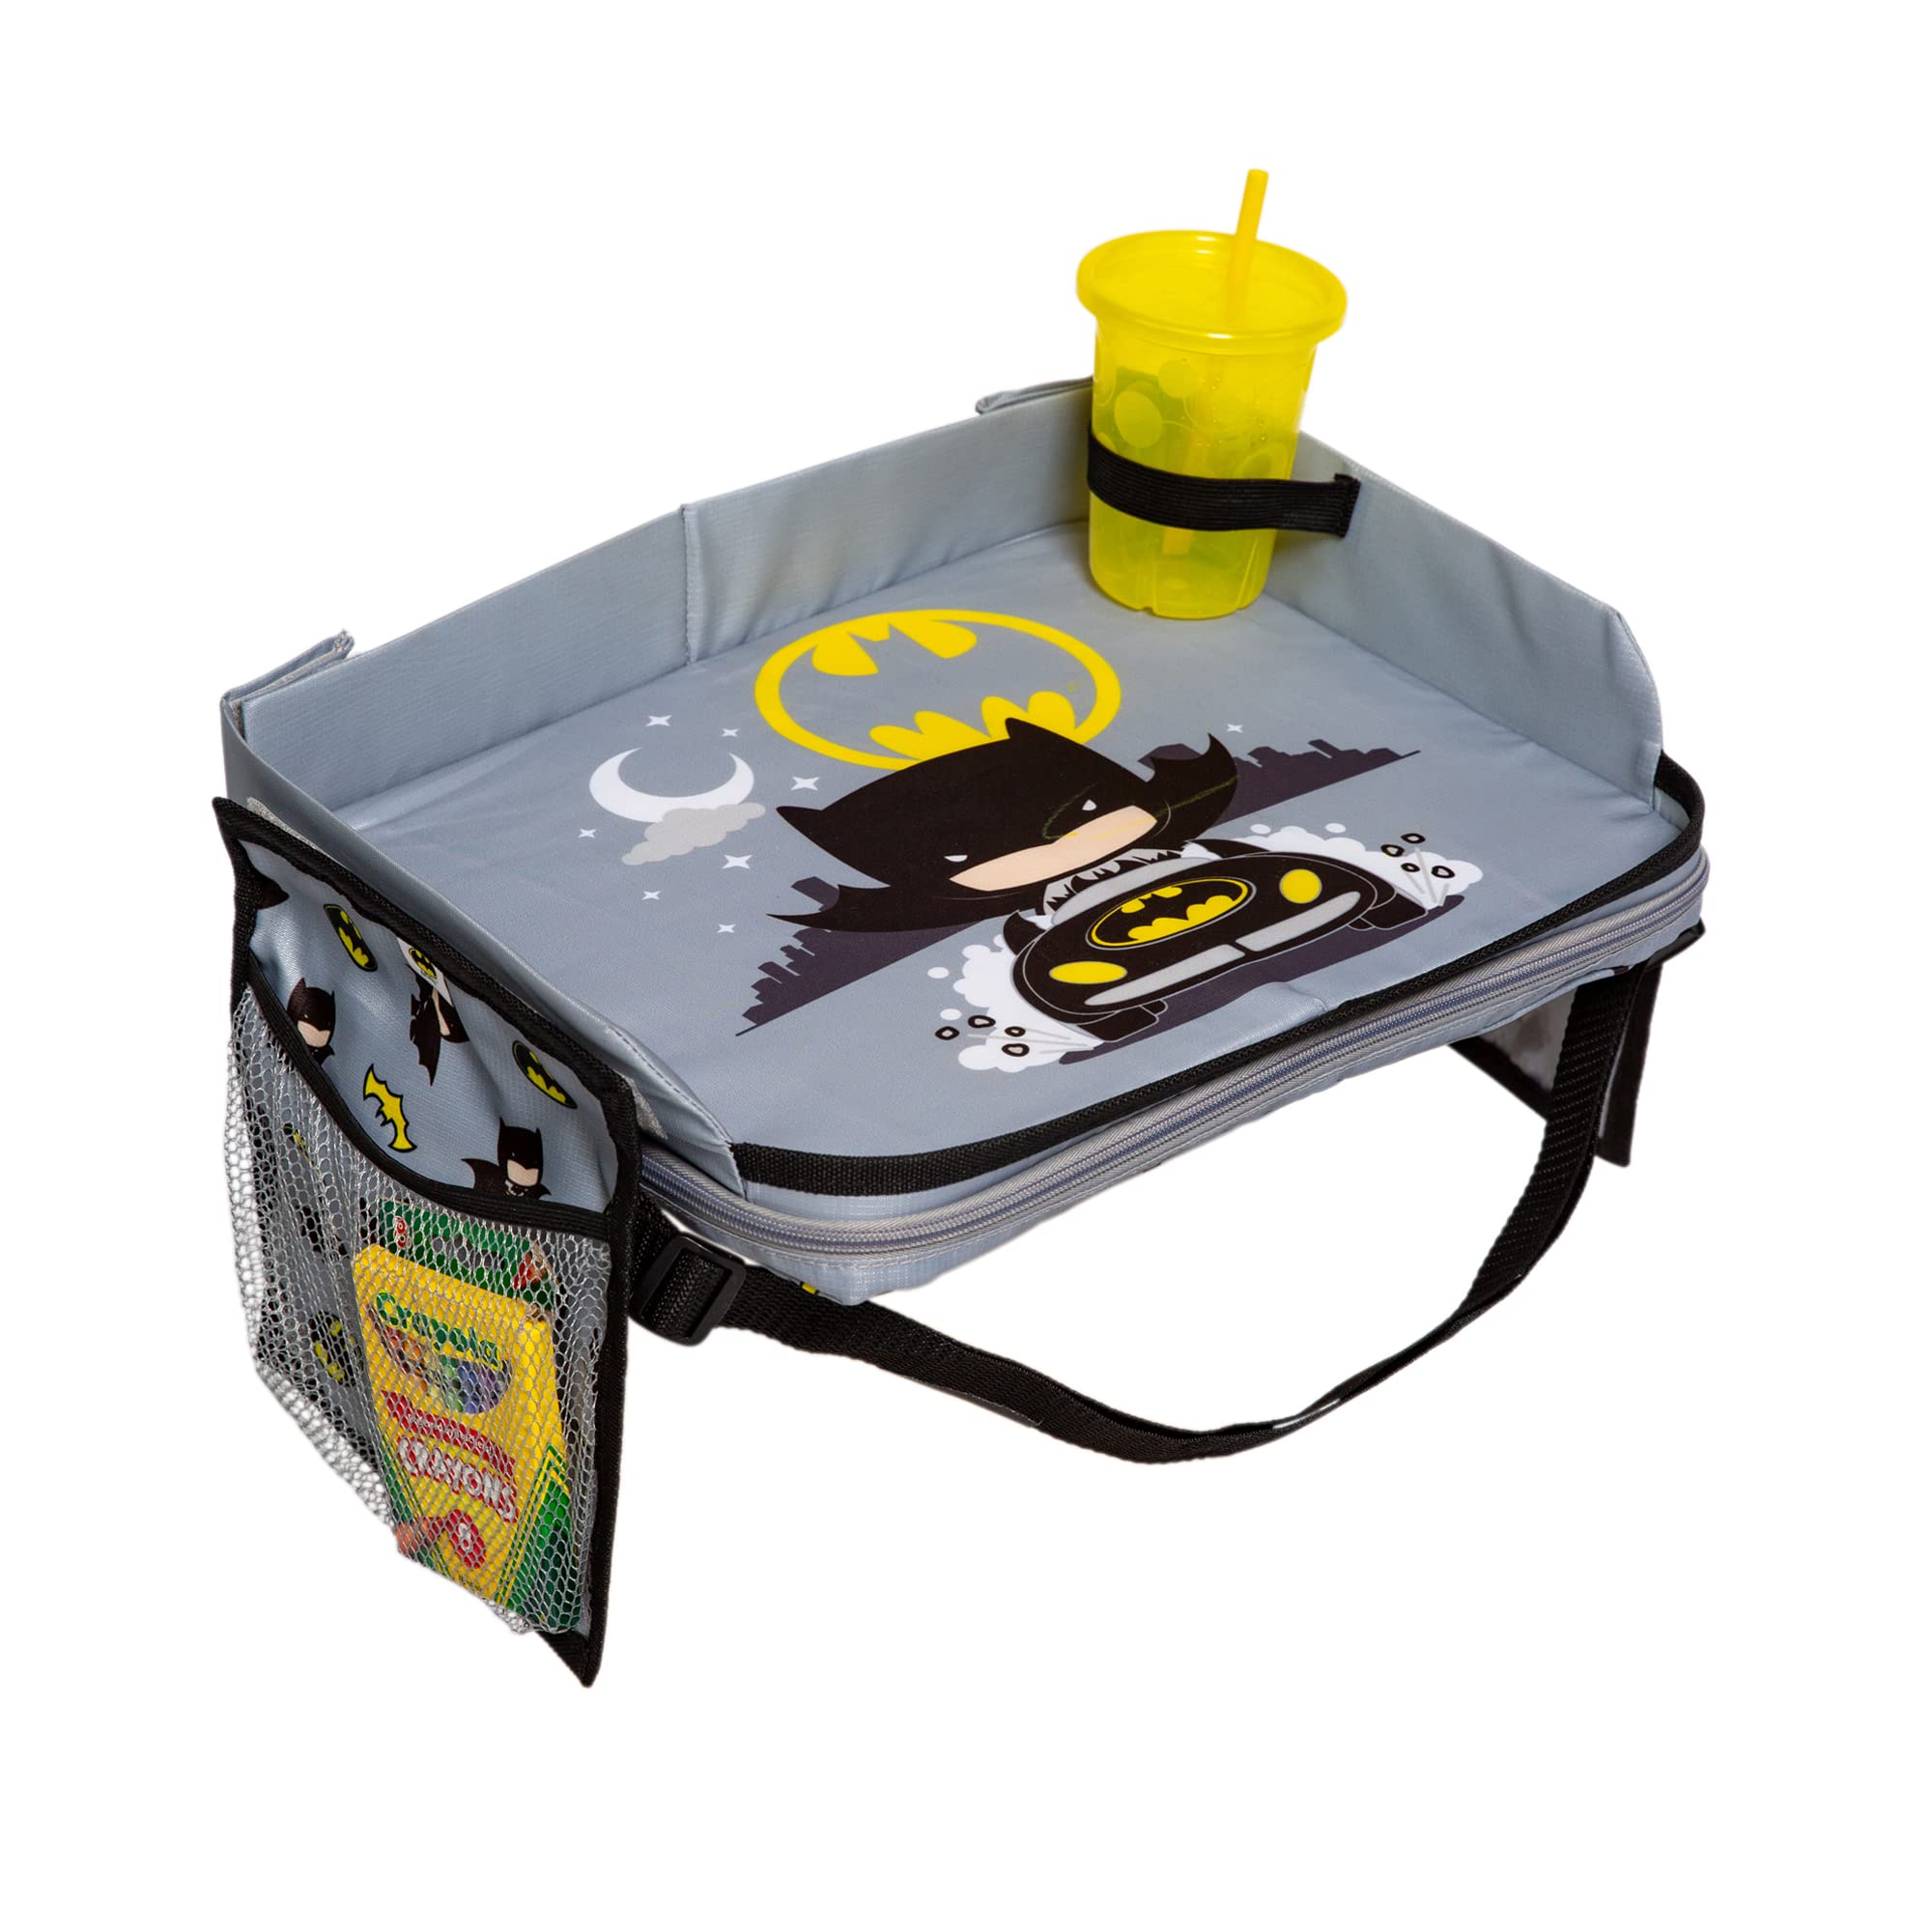 Batman Kids Square Black Lunch Box & Bag | Target